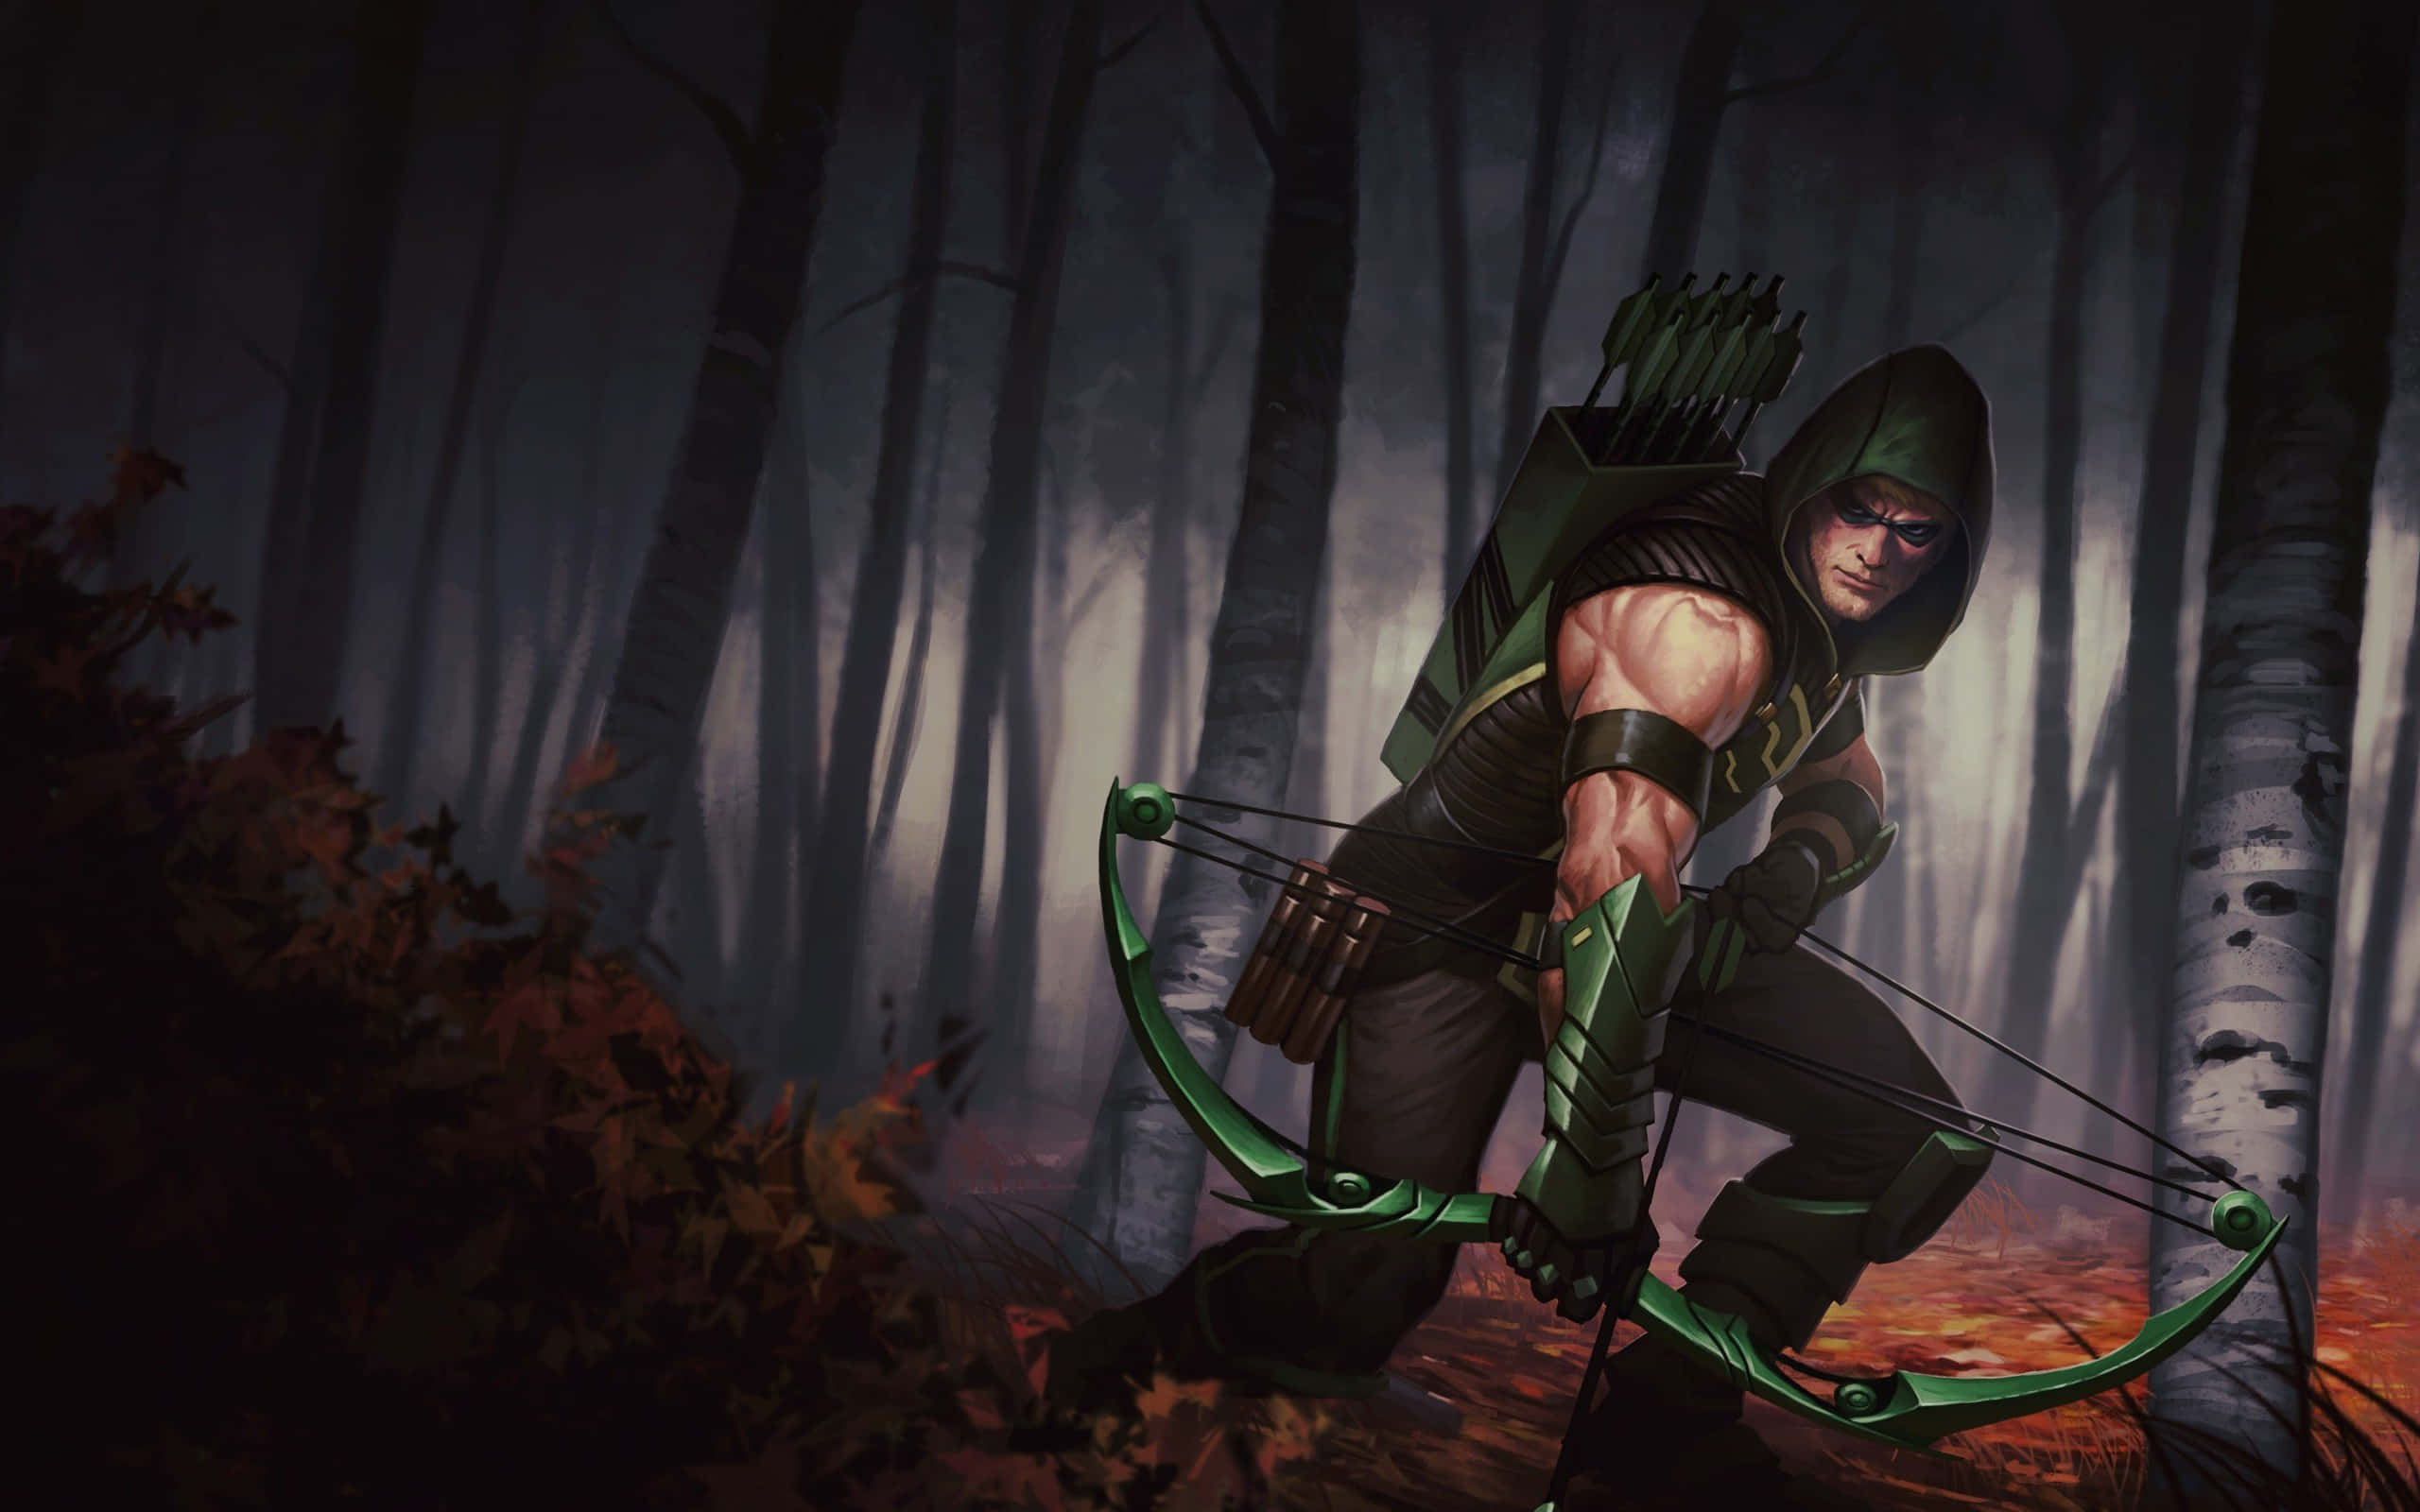 Green Arrow vigilante styling his bow and arrow